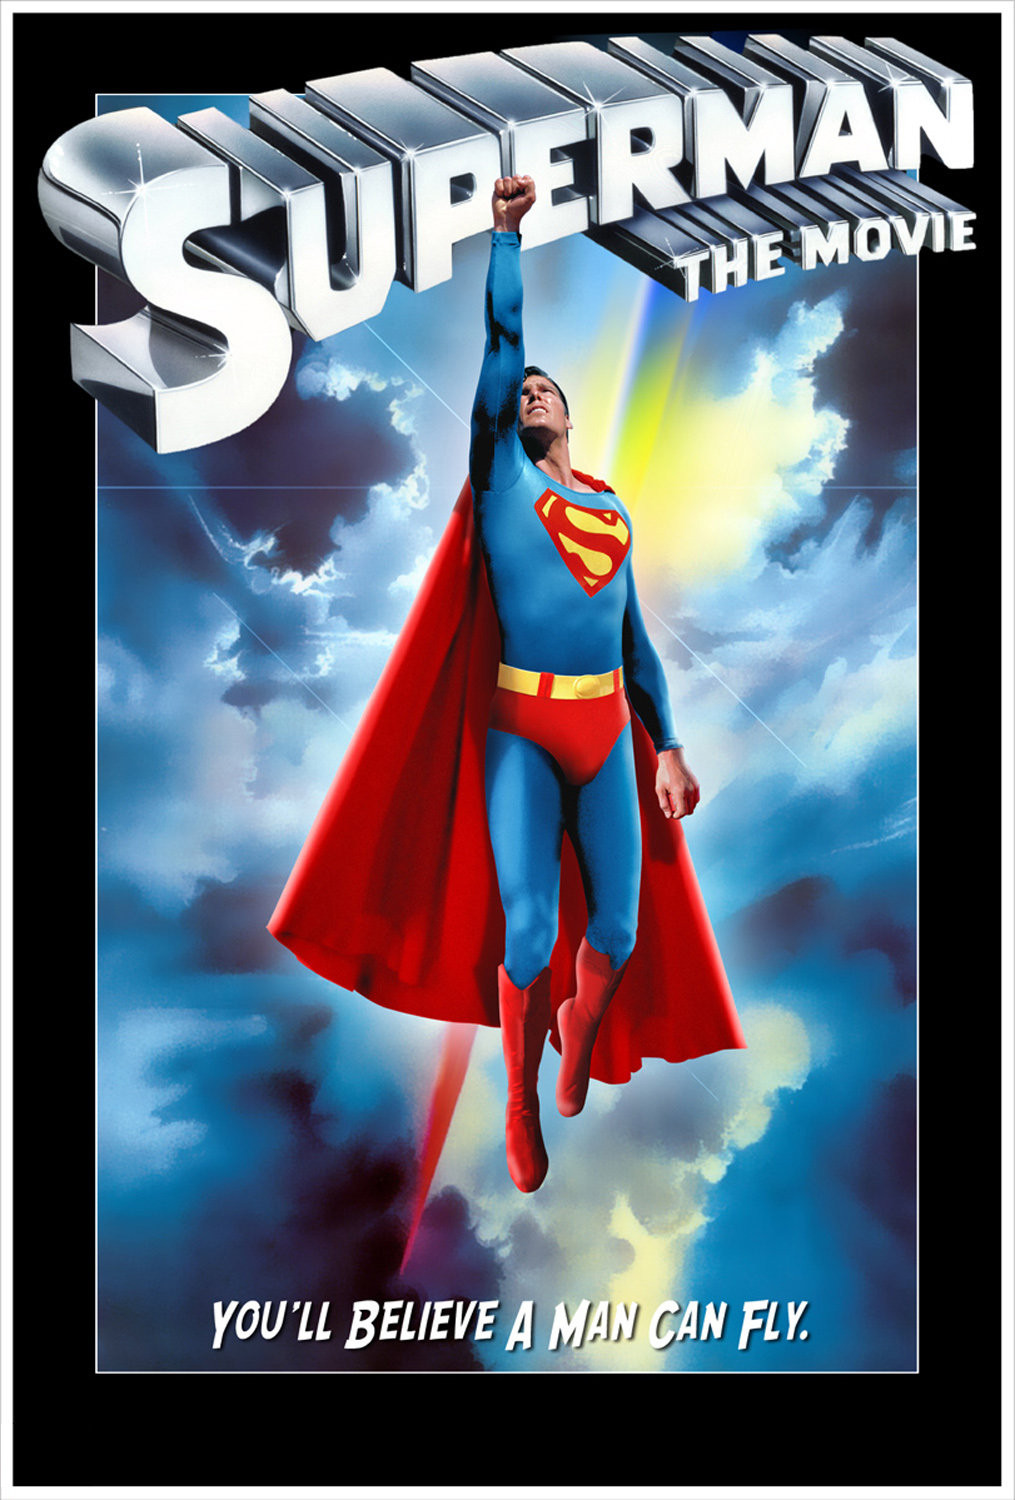 Superman (1978 film series character) - Wikipedia